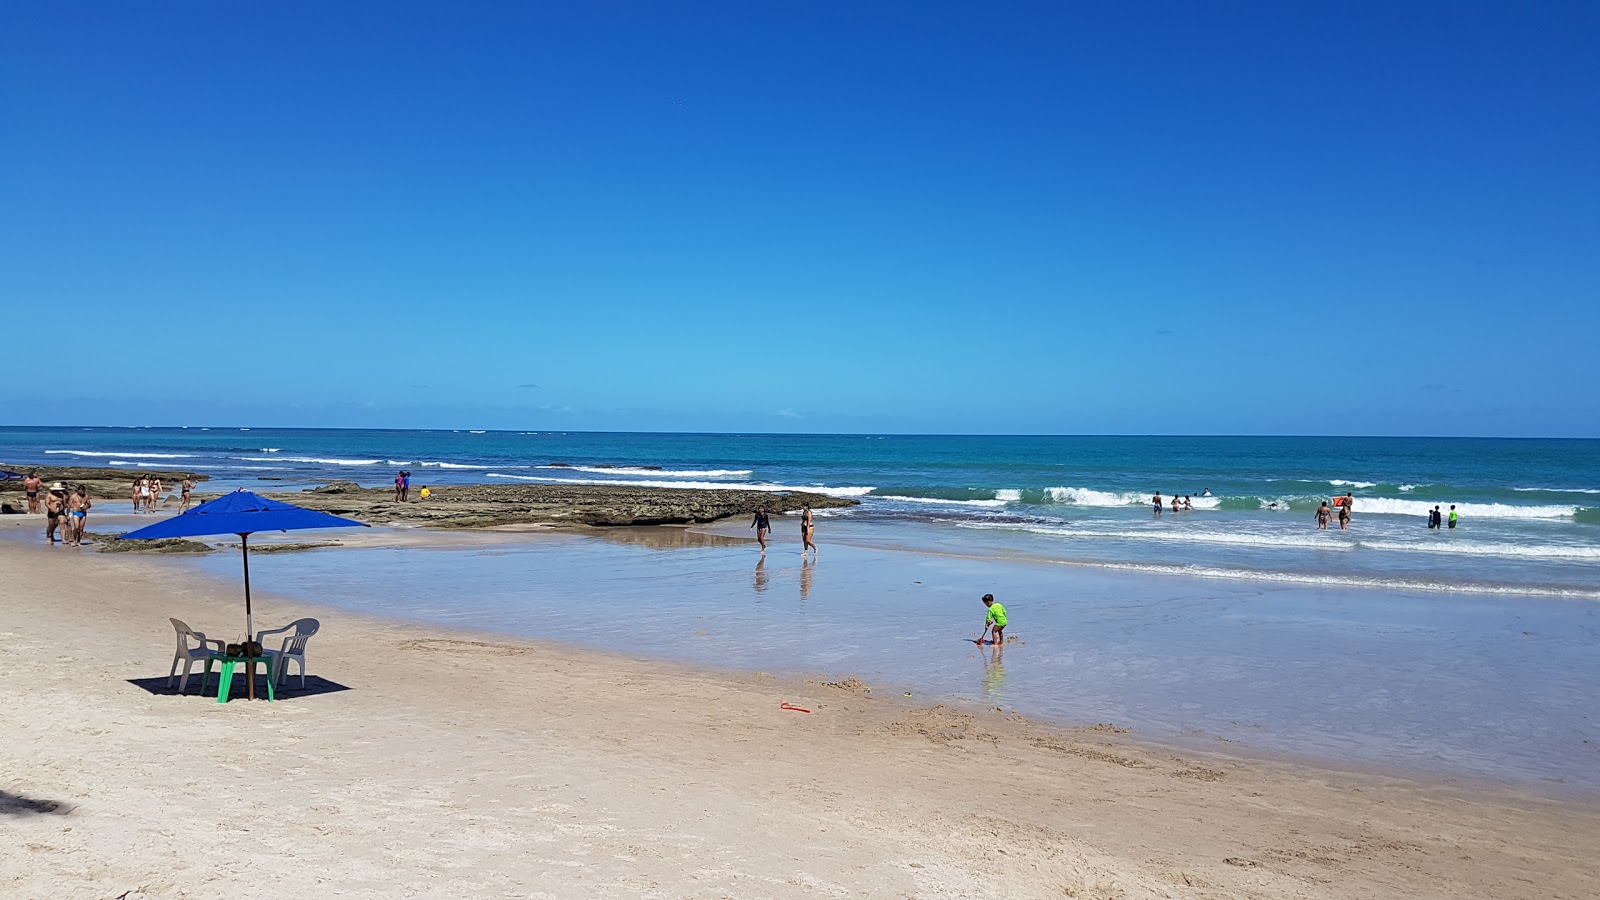 Foto di Praia dos Carneiros con una superficie del sabbia luminosa